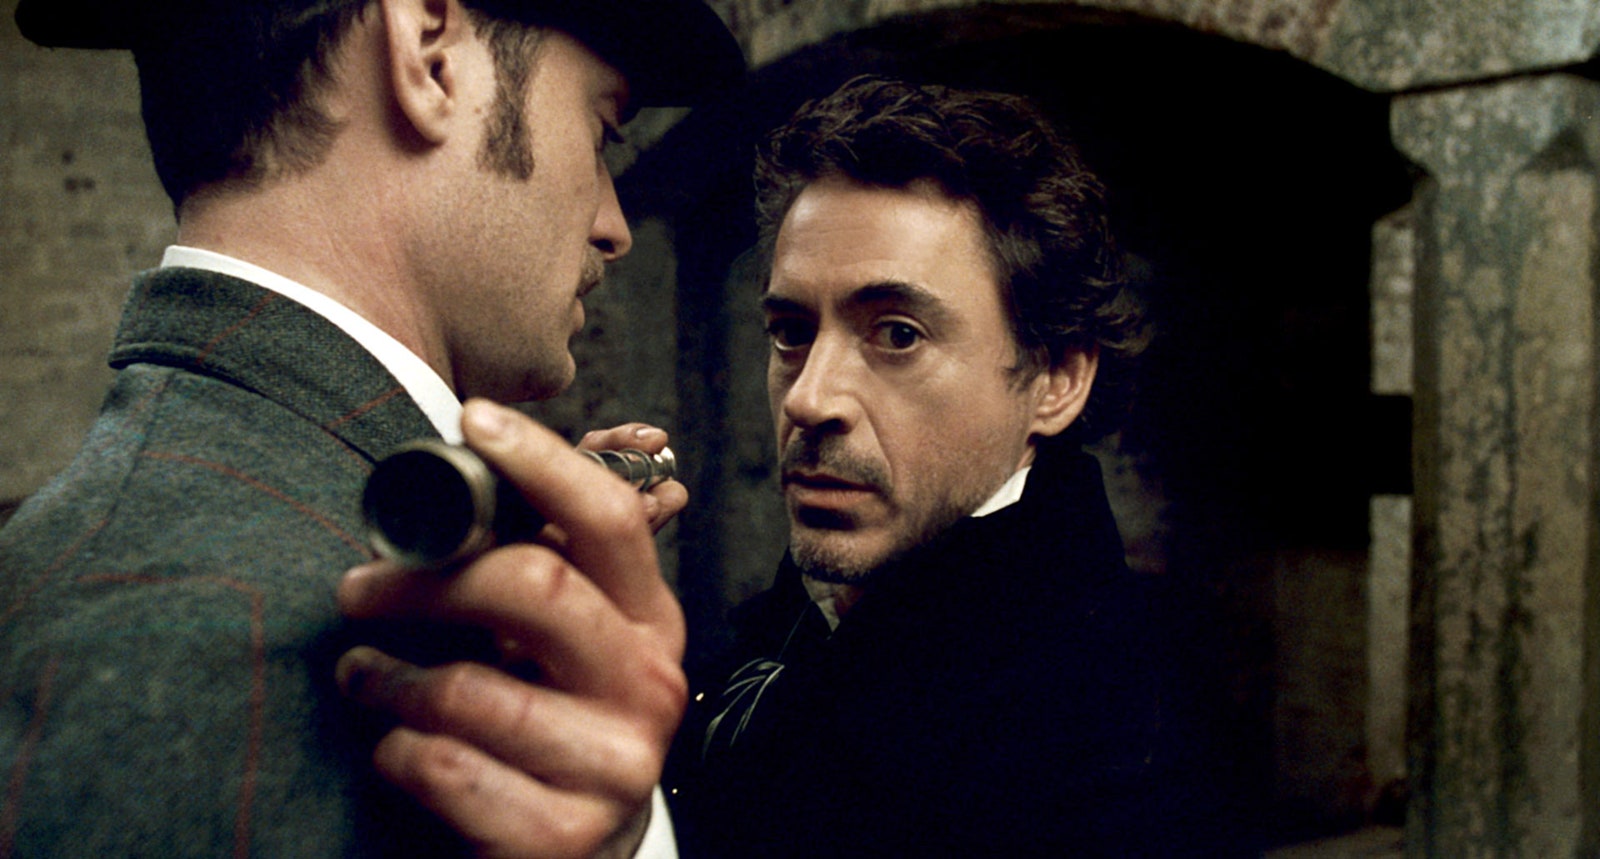 Robert Downey Jr. in Sherlock Holmes with Jude Law